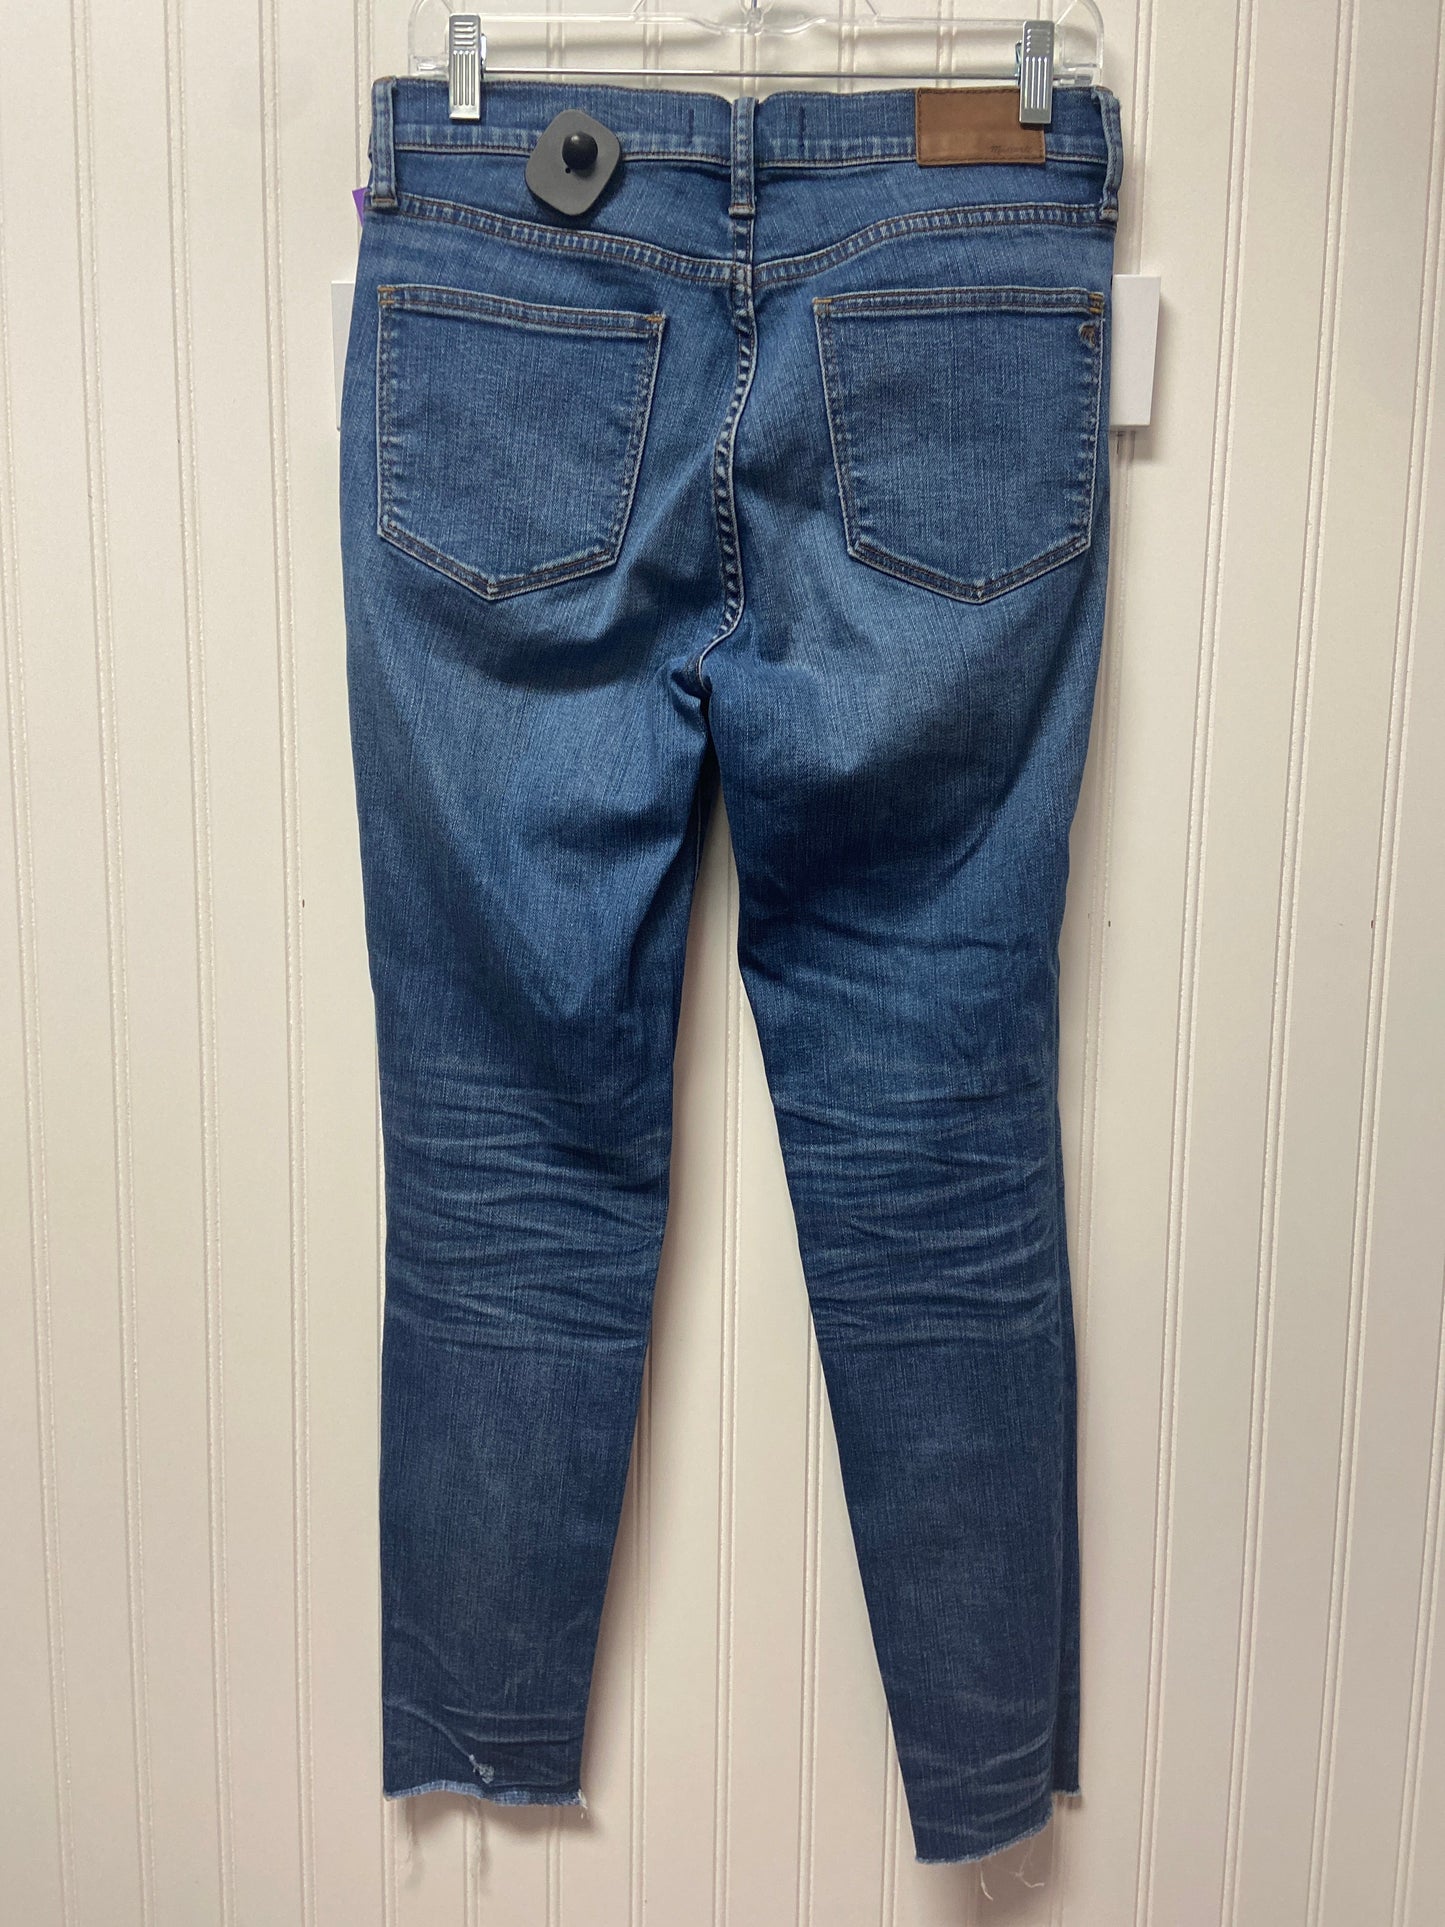 Blue Denim Jeans Skinny Madewell, Size 6